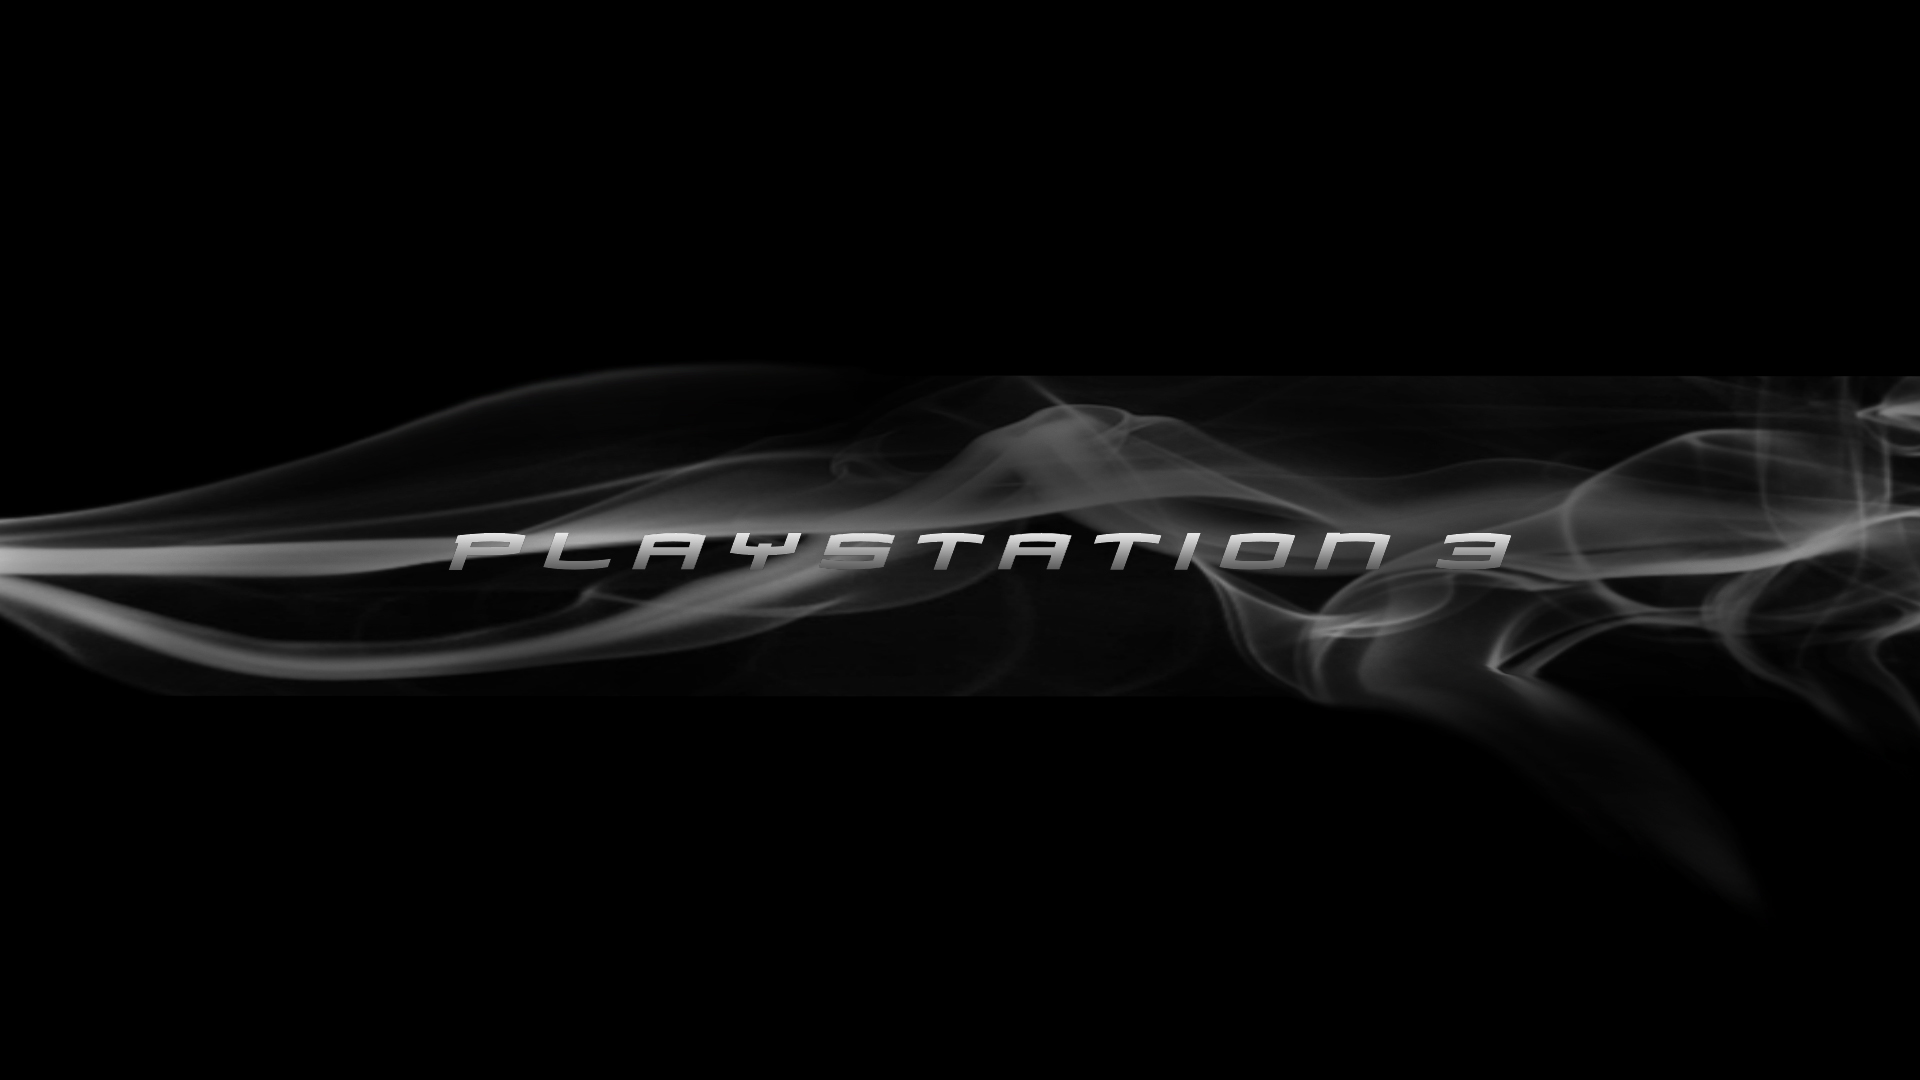 Playstation Smoke Logo Wallpaper